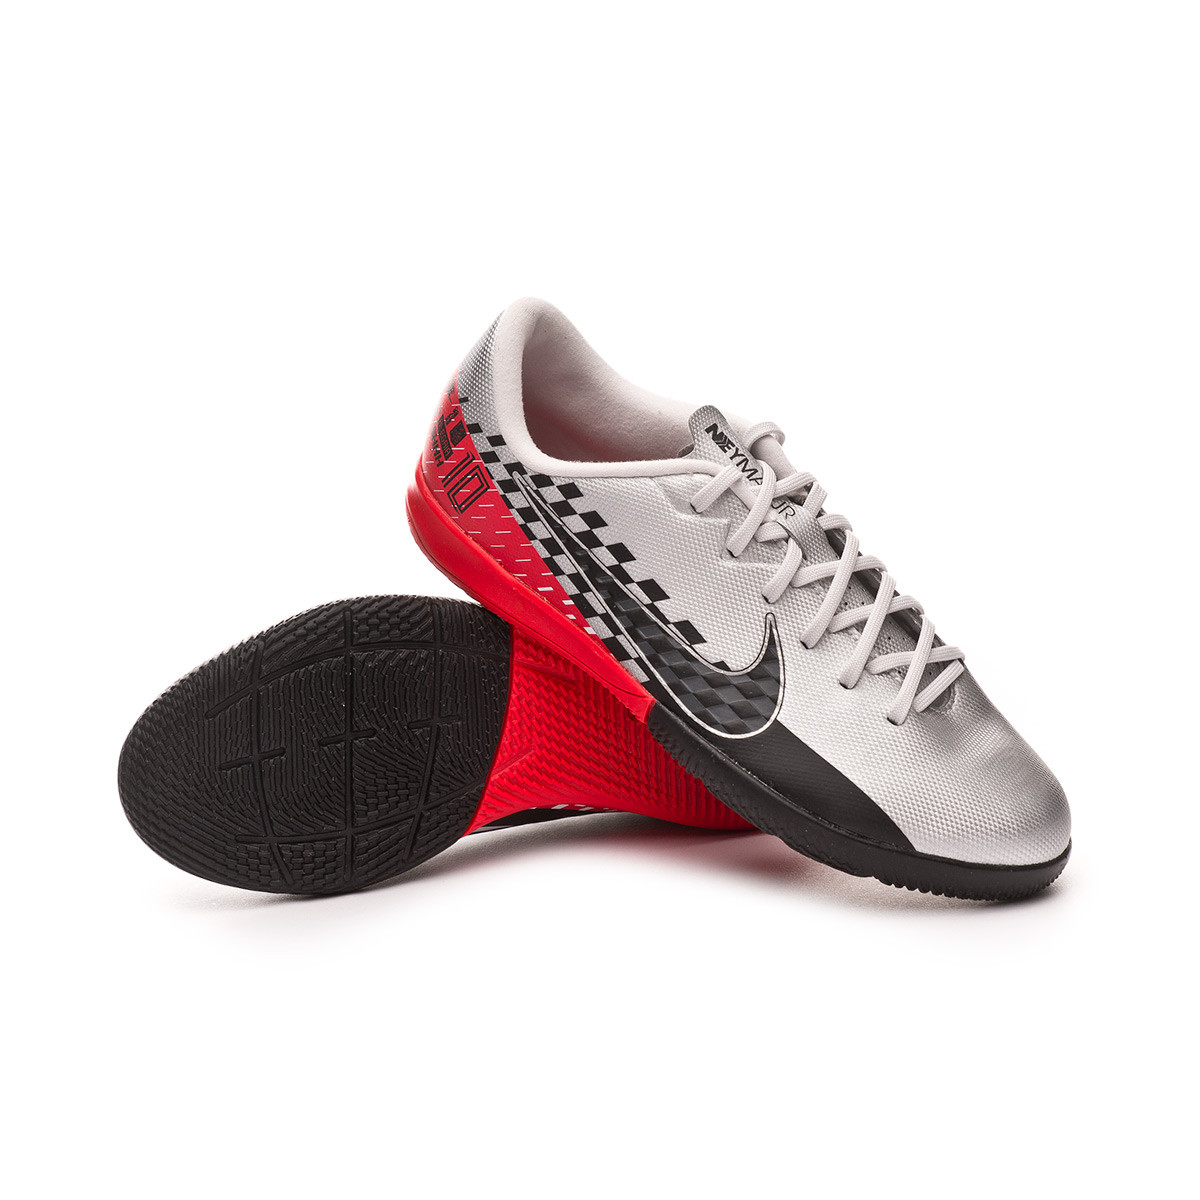 Zapatilla Nike Mercurial Vapor XIII Academy IC Neymar Jr Niño  Chrome-Black-Red orbit-Platinum tint - Tienda de fútbol Fútbol Emotion